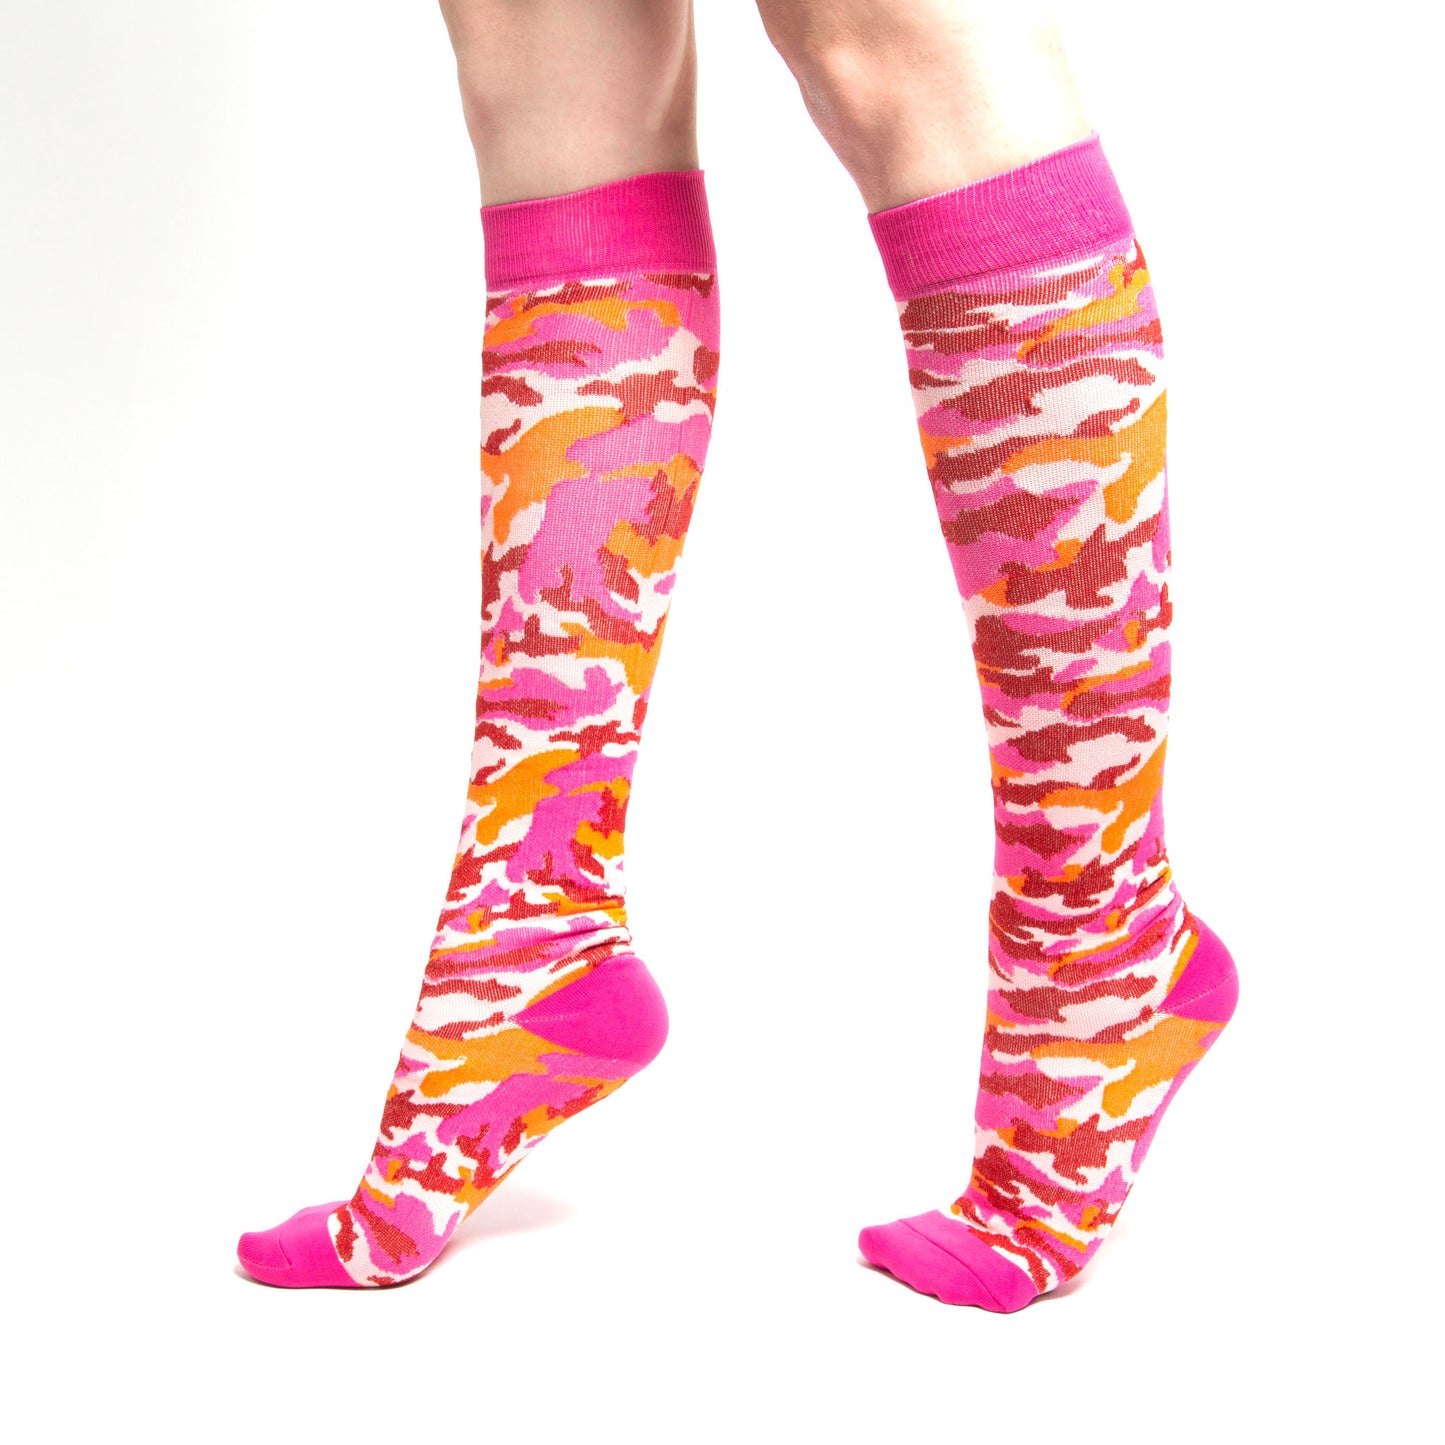 Camo Knee High 15-20mmHg Compression Socks